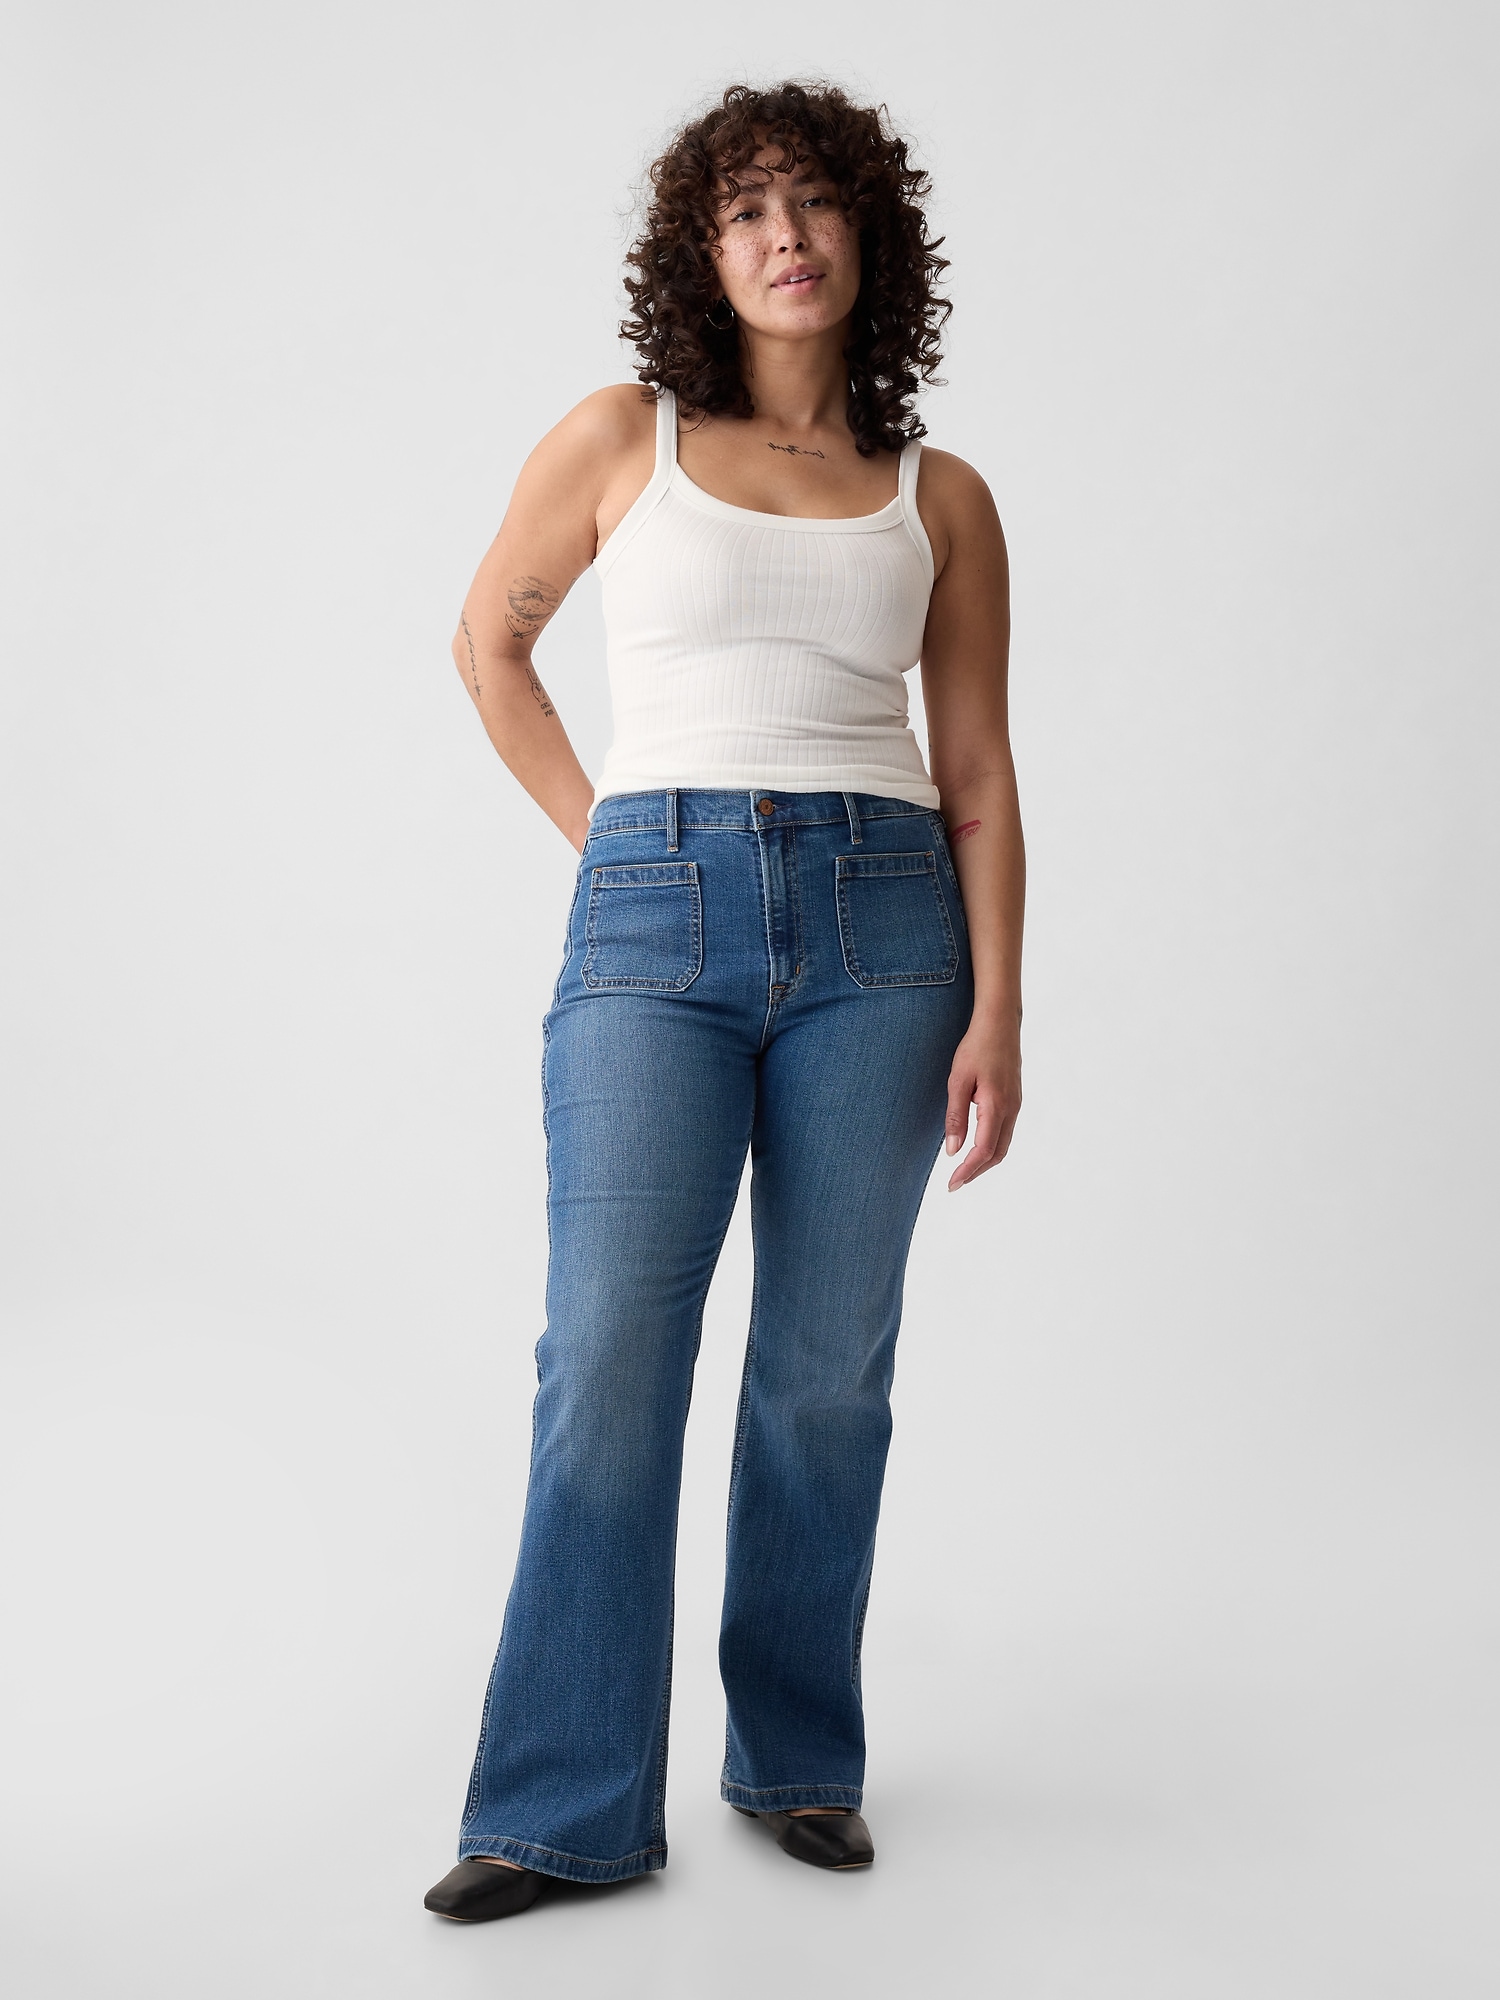 Gap launches skinny flare jean, British Vogue